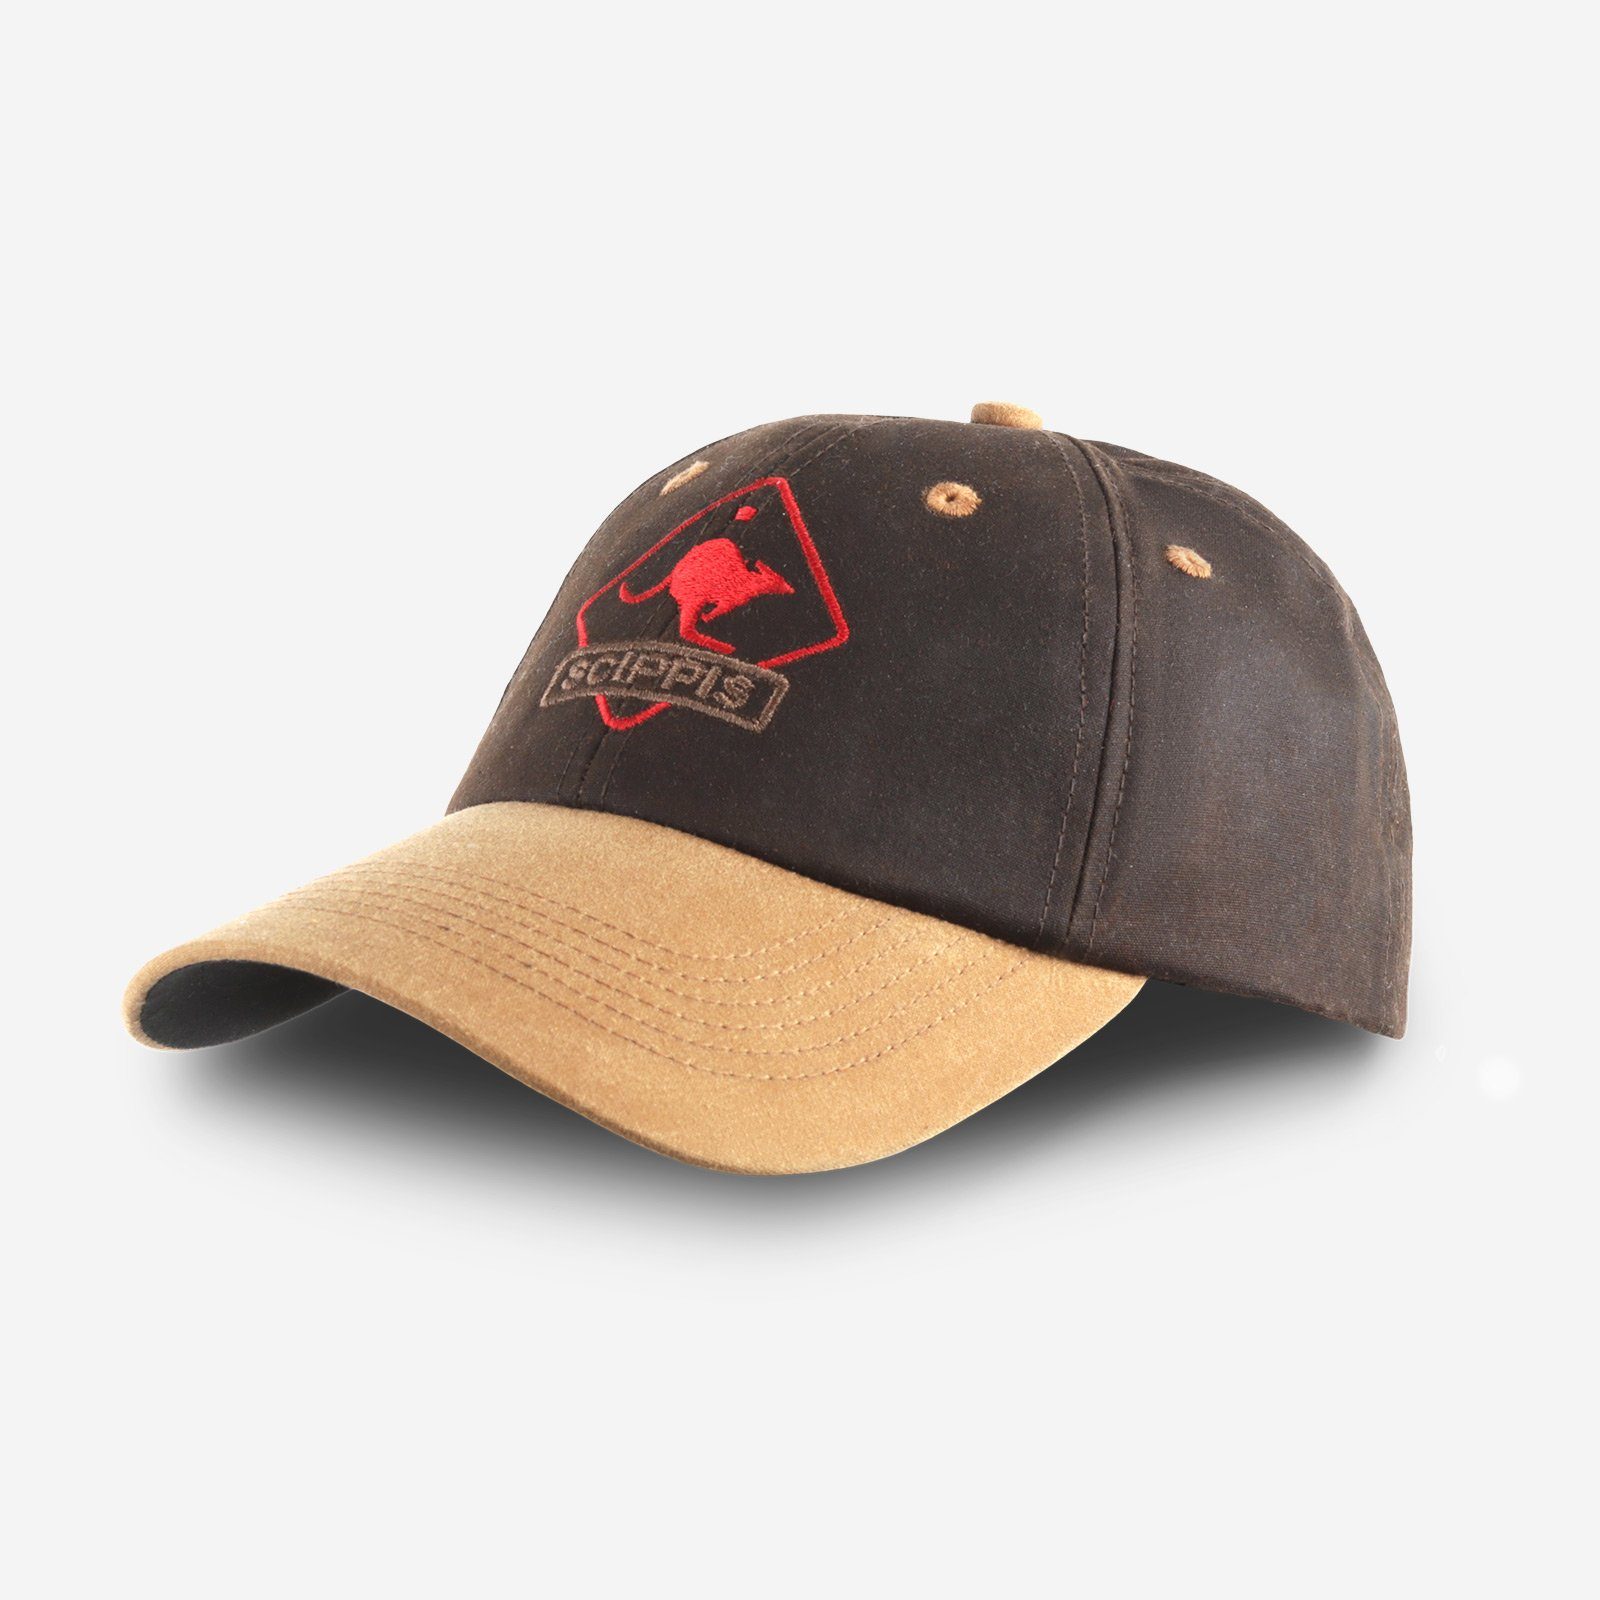 Scippis Baseball Cap CAP tan/brown atmungsaktiv windundurchlässig OILSKIN Extrem wasserabweisend